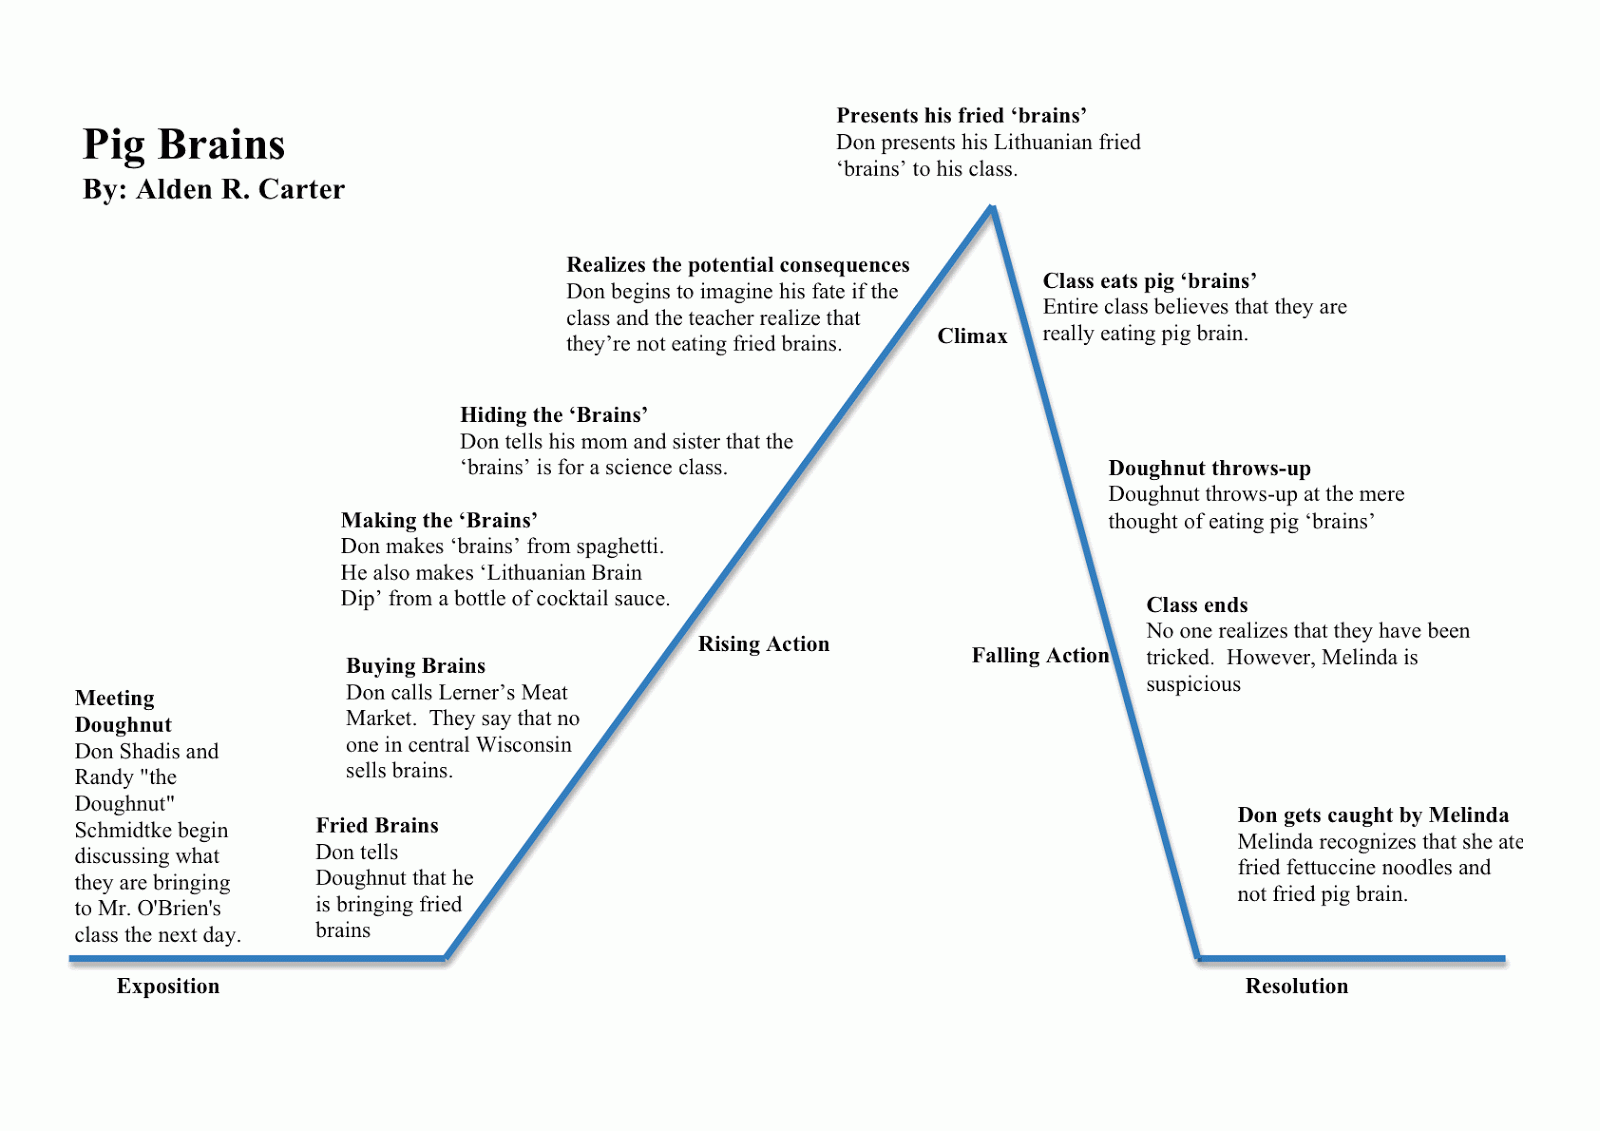 Macbeth Plot Chart